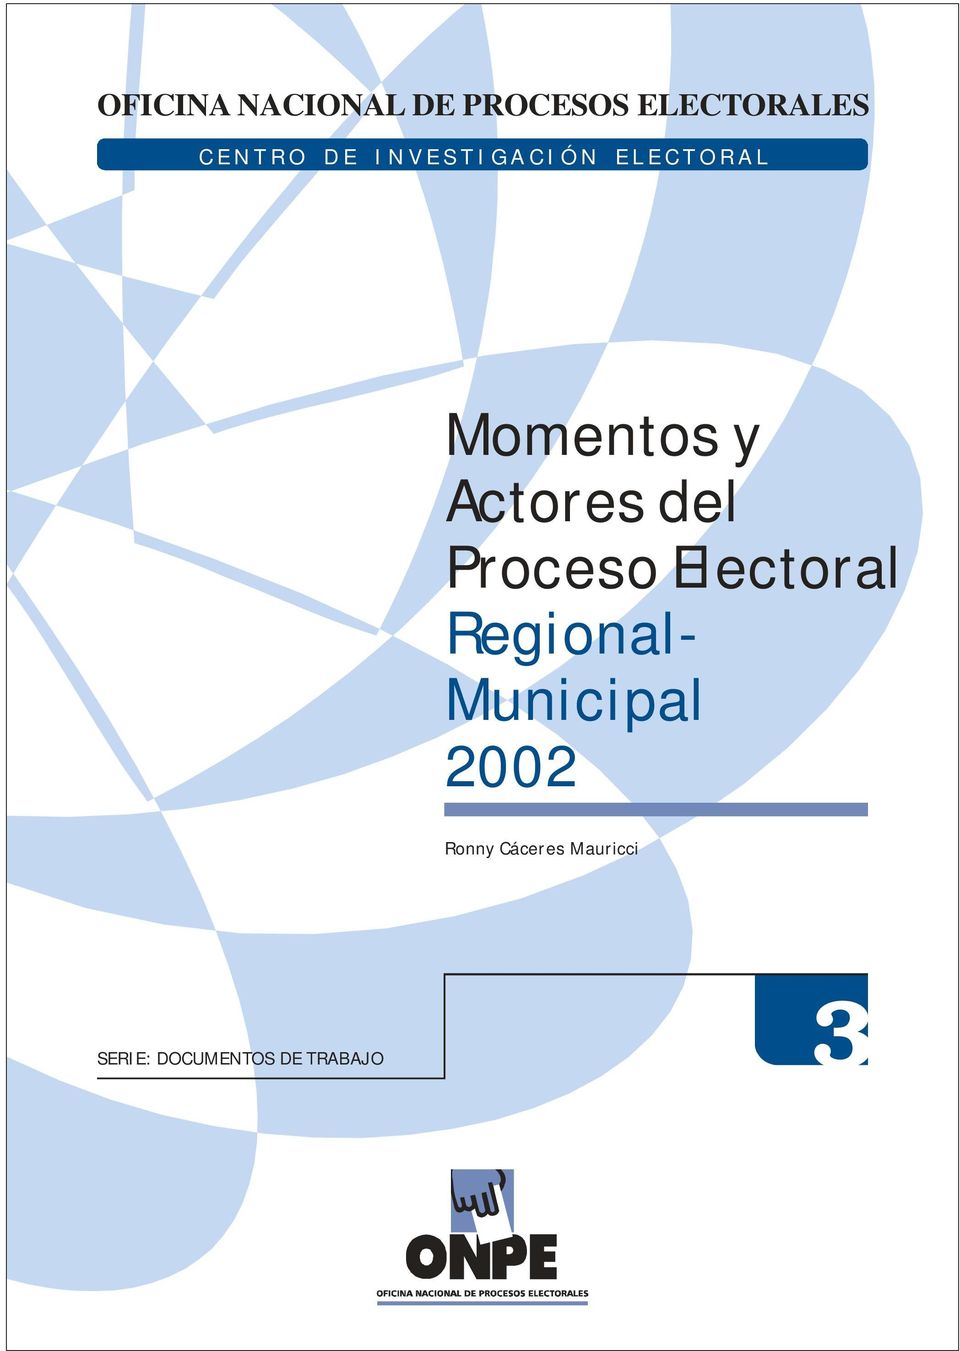 del Proceso Electoral Regional- Municipal 00